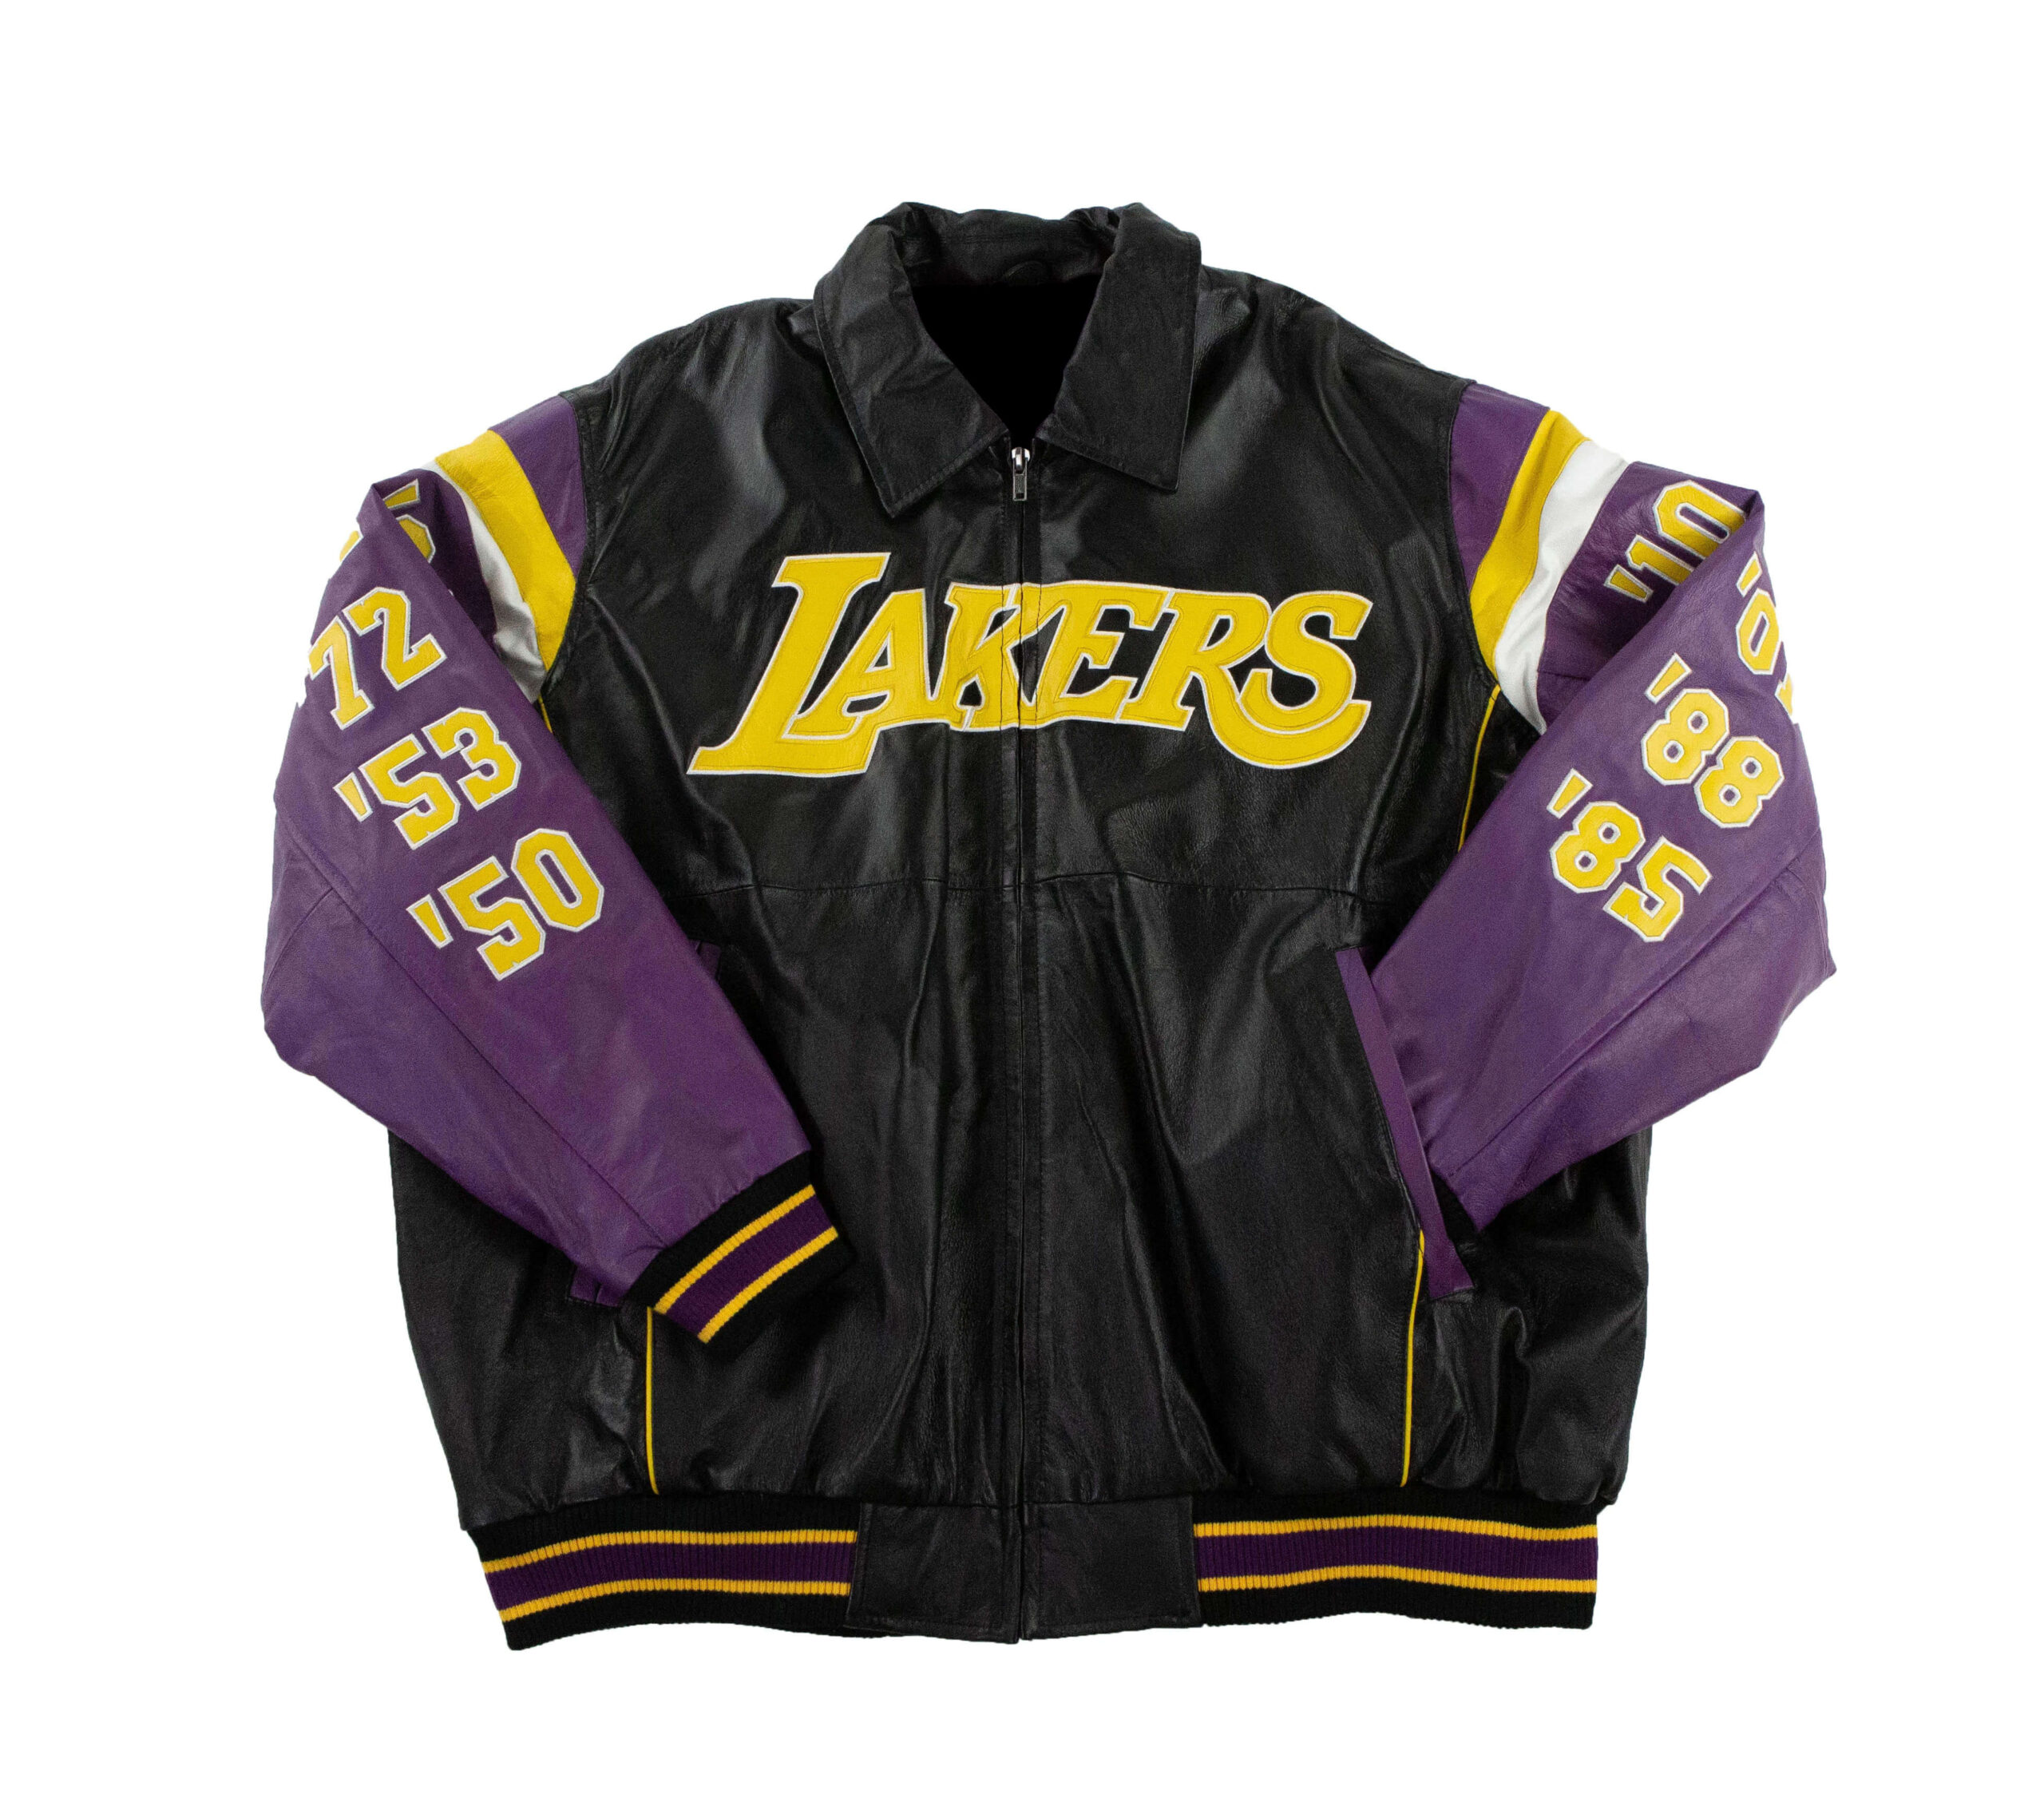 Buy Vintage Lakers Jacket Online In India -  India